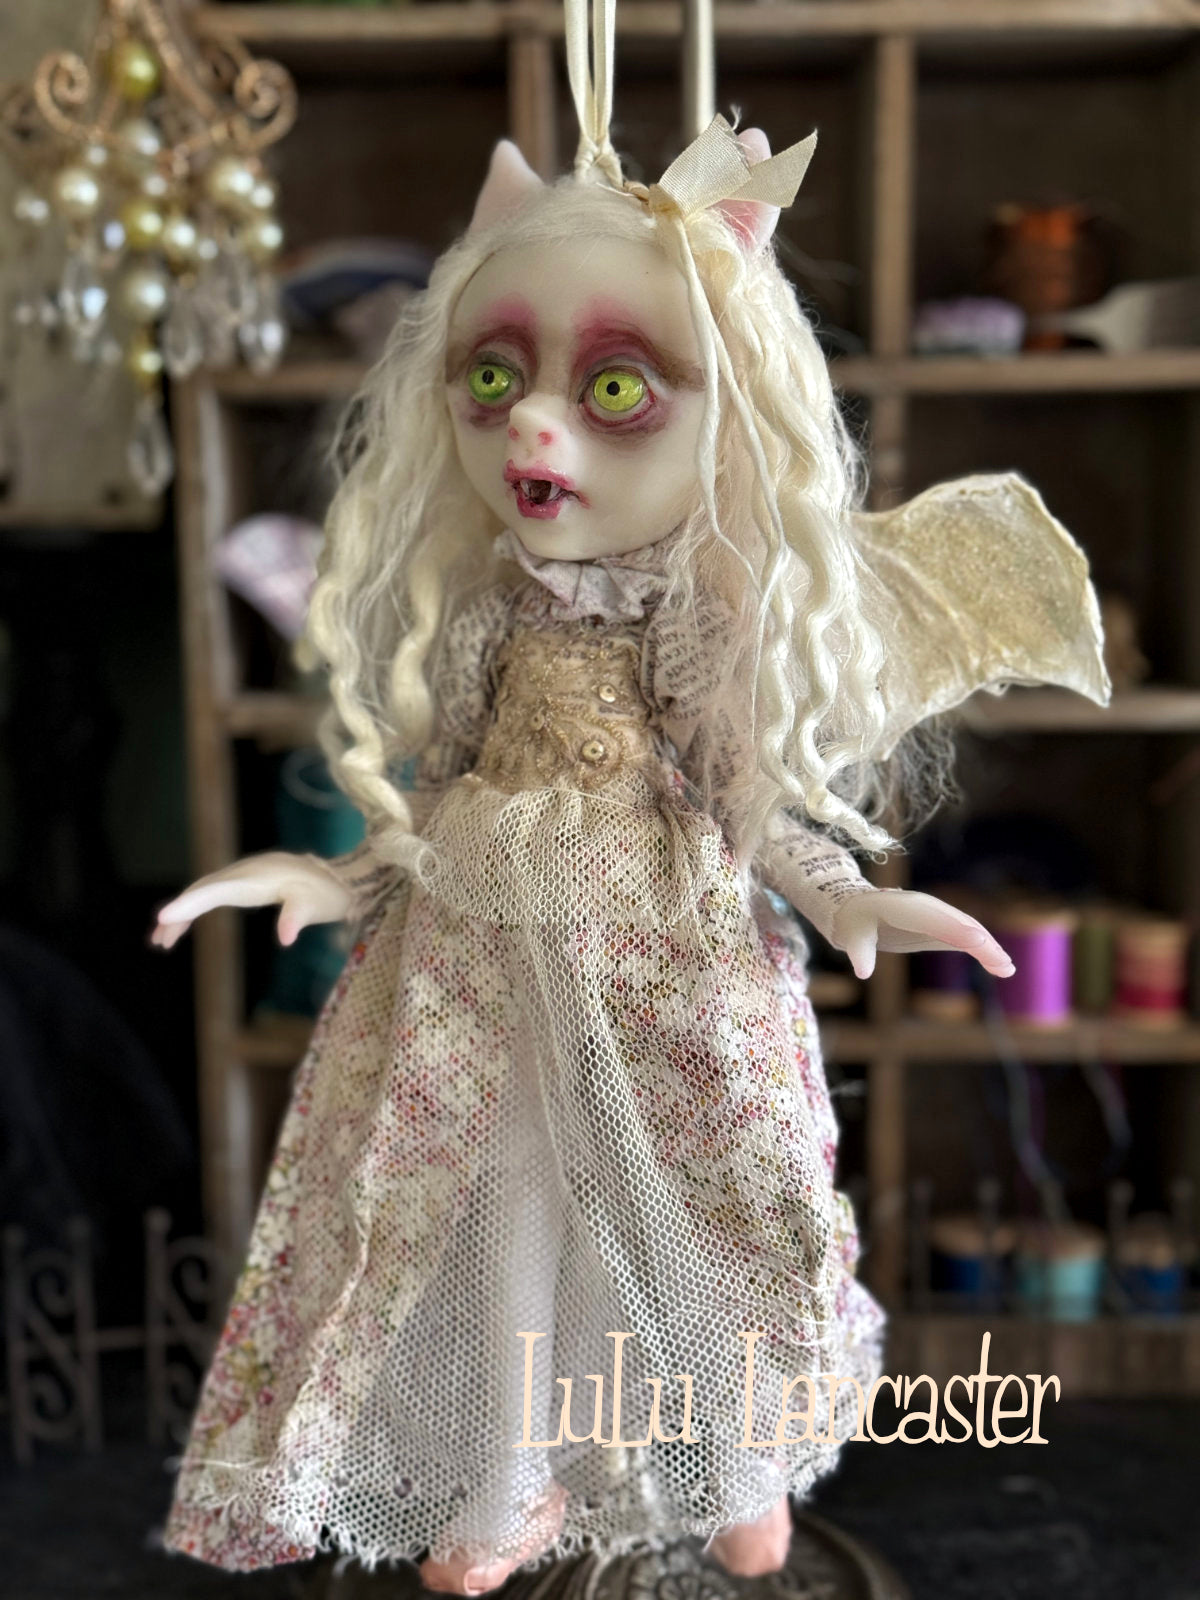 Alyona Vampire Bat hanging Original LuLu Lancaster Art Doll